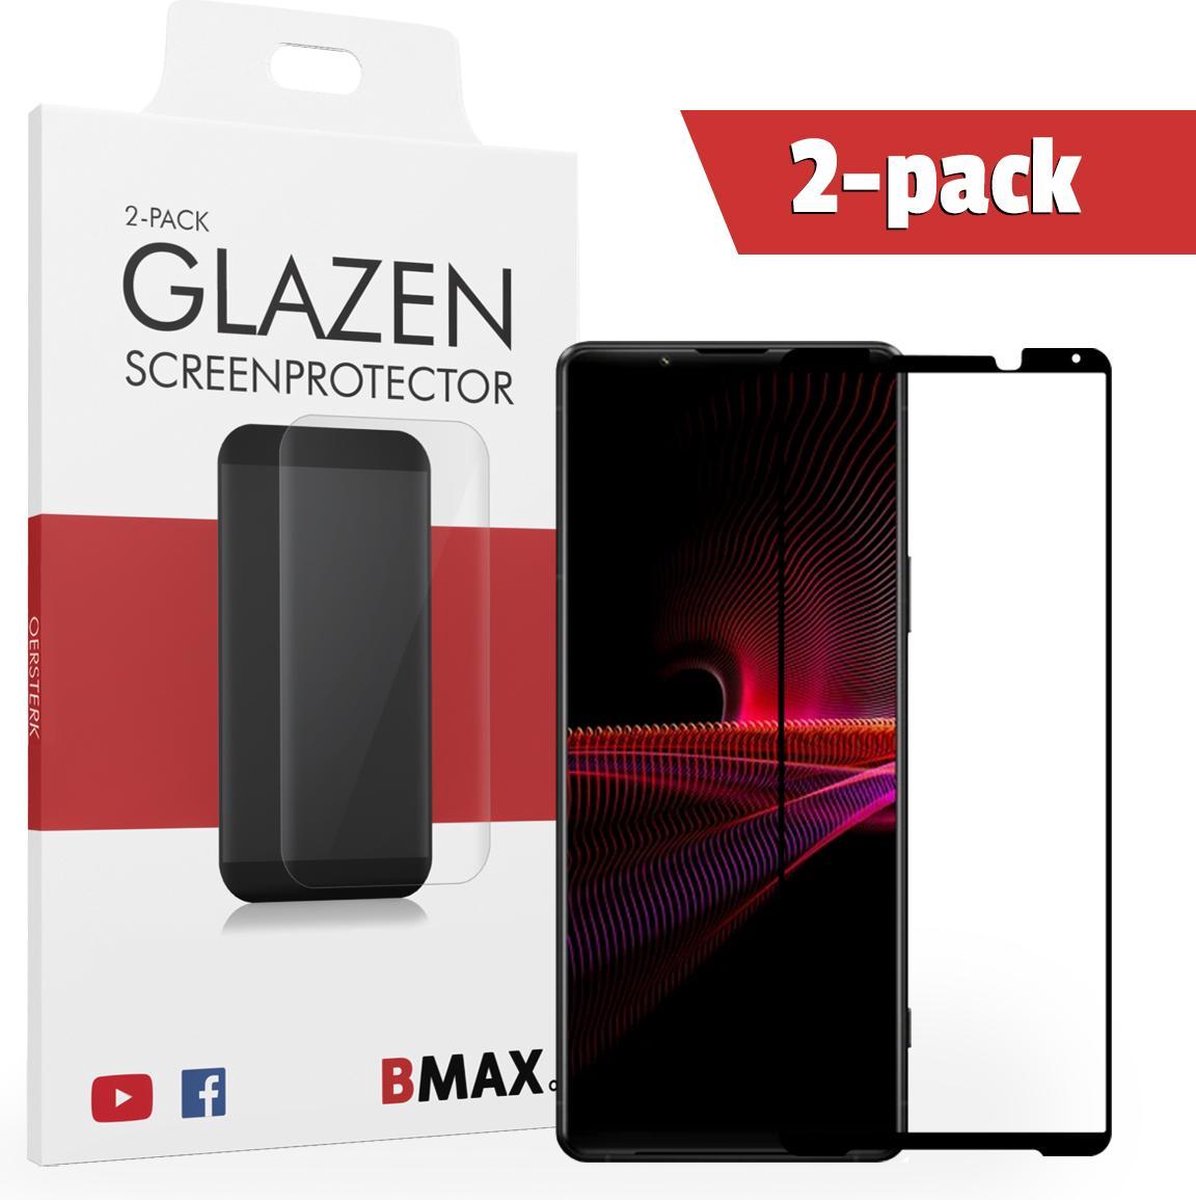 2-pack Bmax Sony Xperia 1 Iii Screenprotector - Glass - Full Cover 2.5d - Black